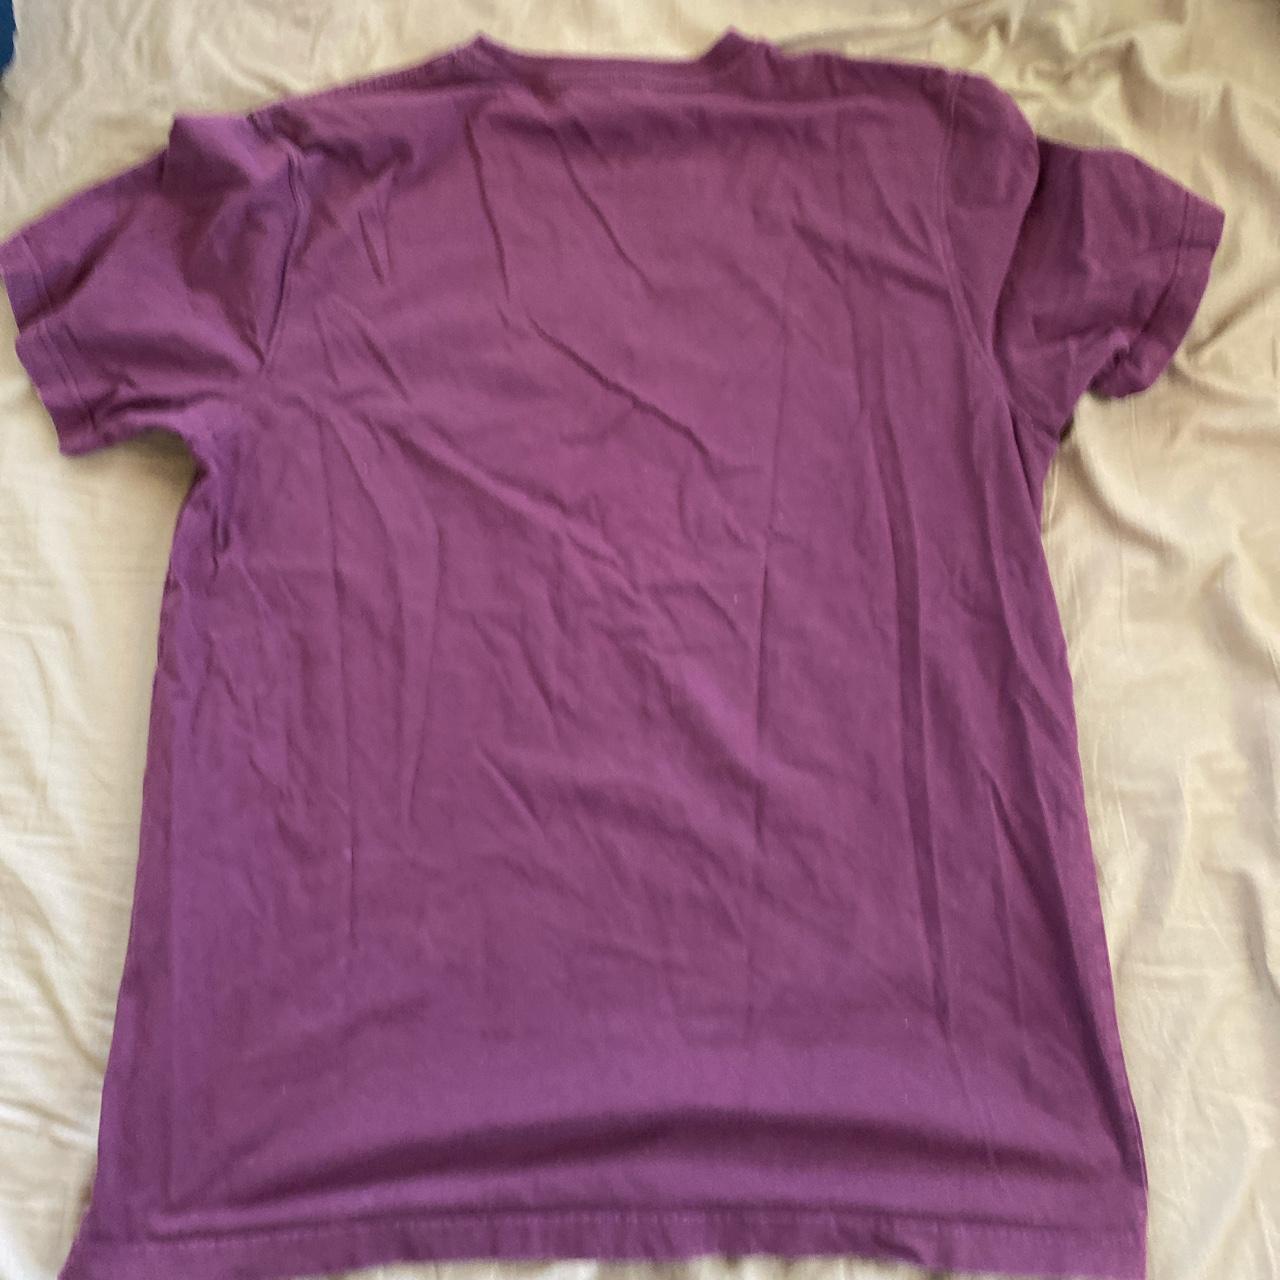 Product Image 3 - Sweet Maharishi tee shirt, in